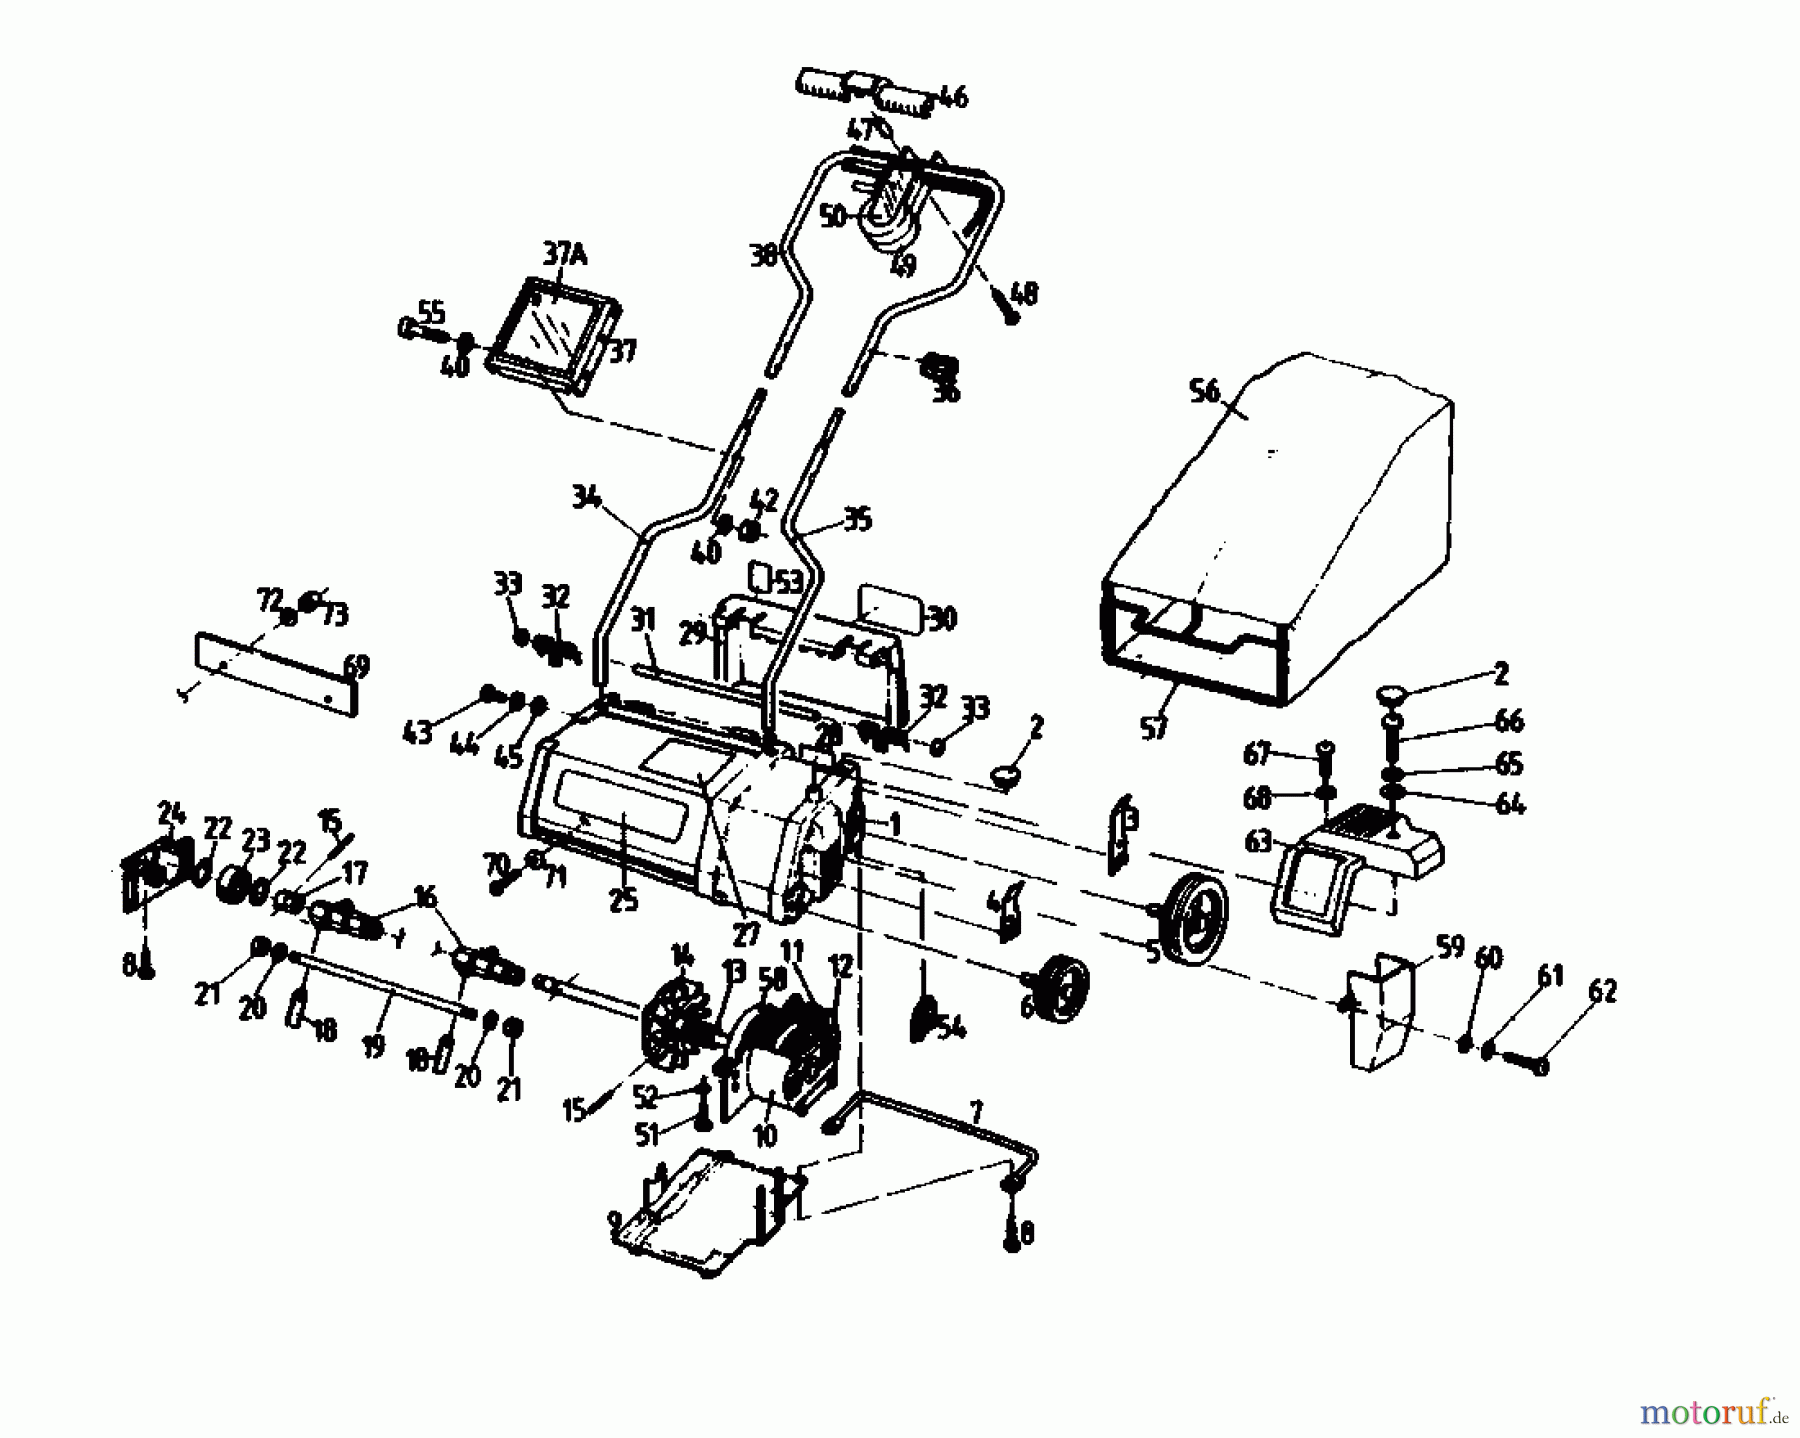  Gutbrod Electric verticutter VE 32 02846.04  (1988) Basic machine